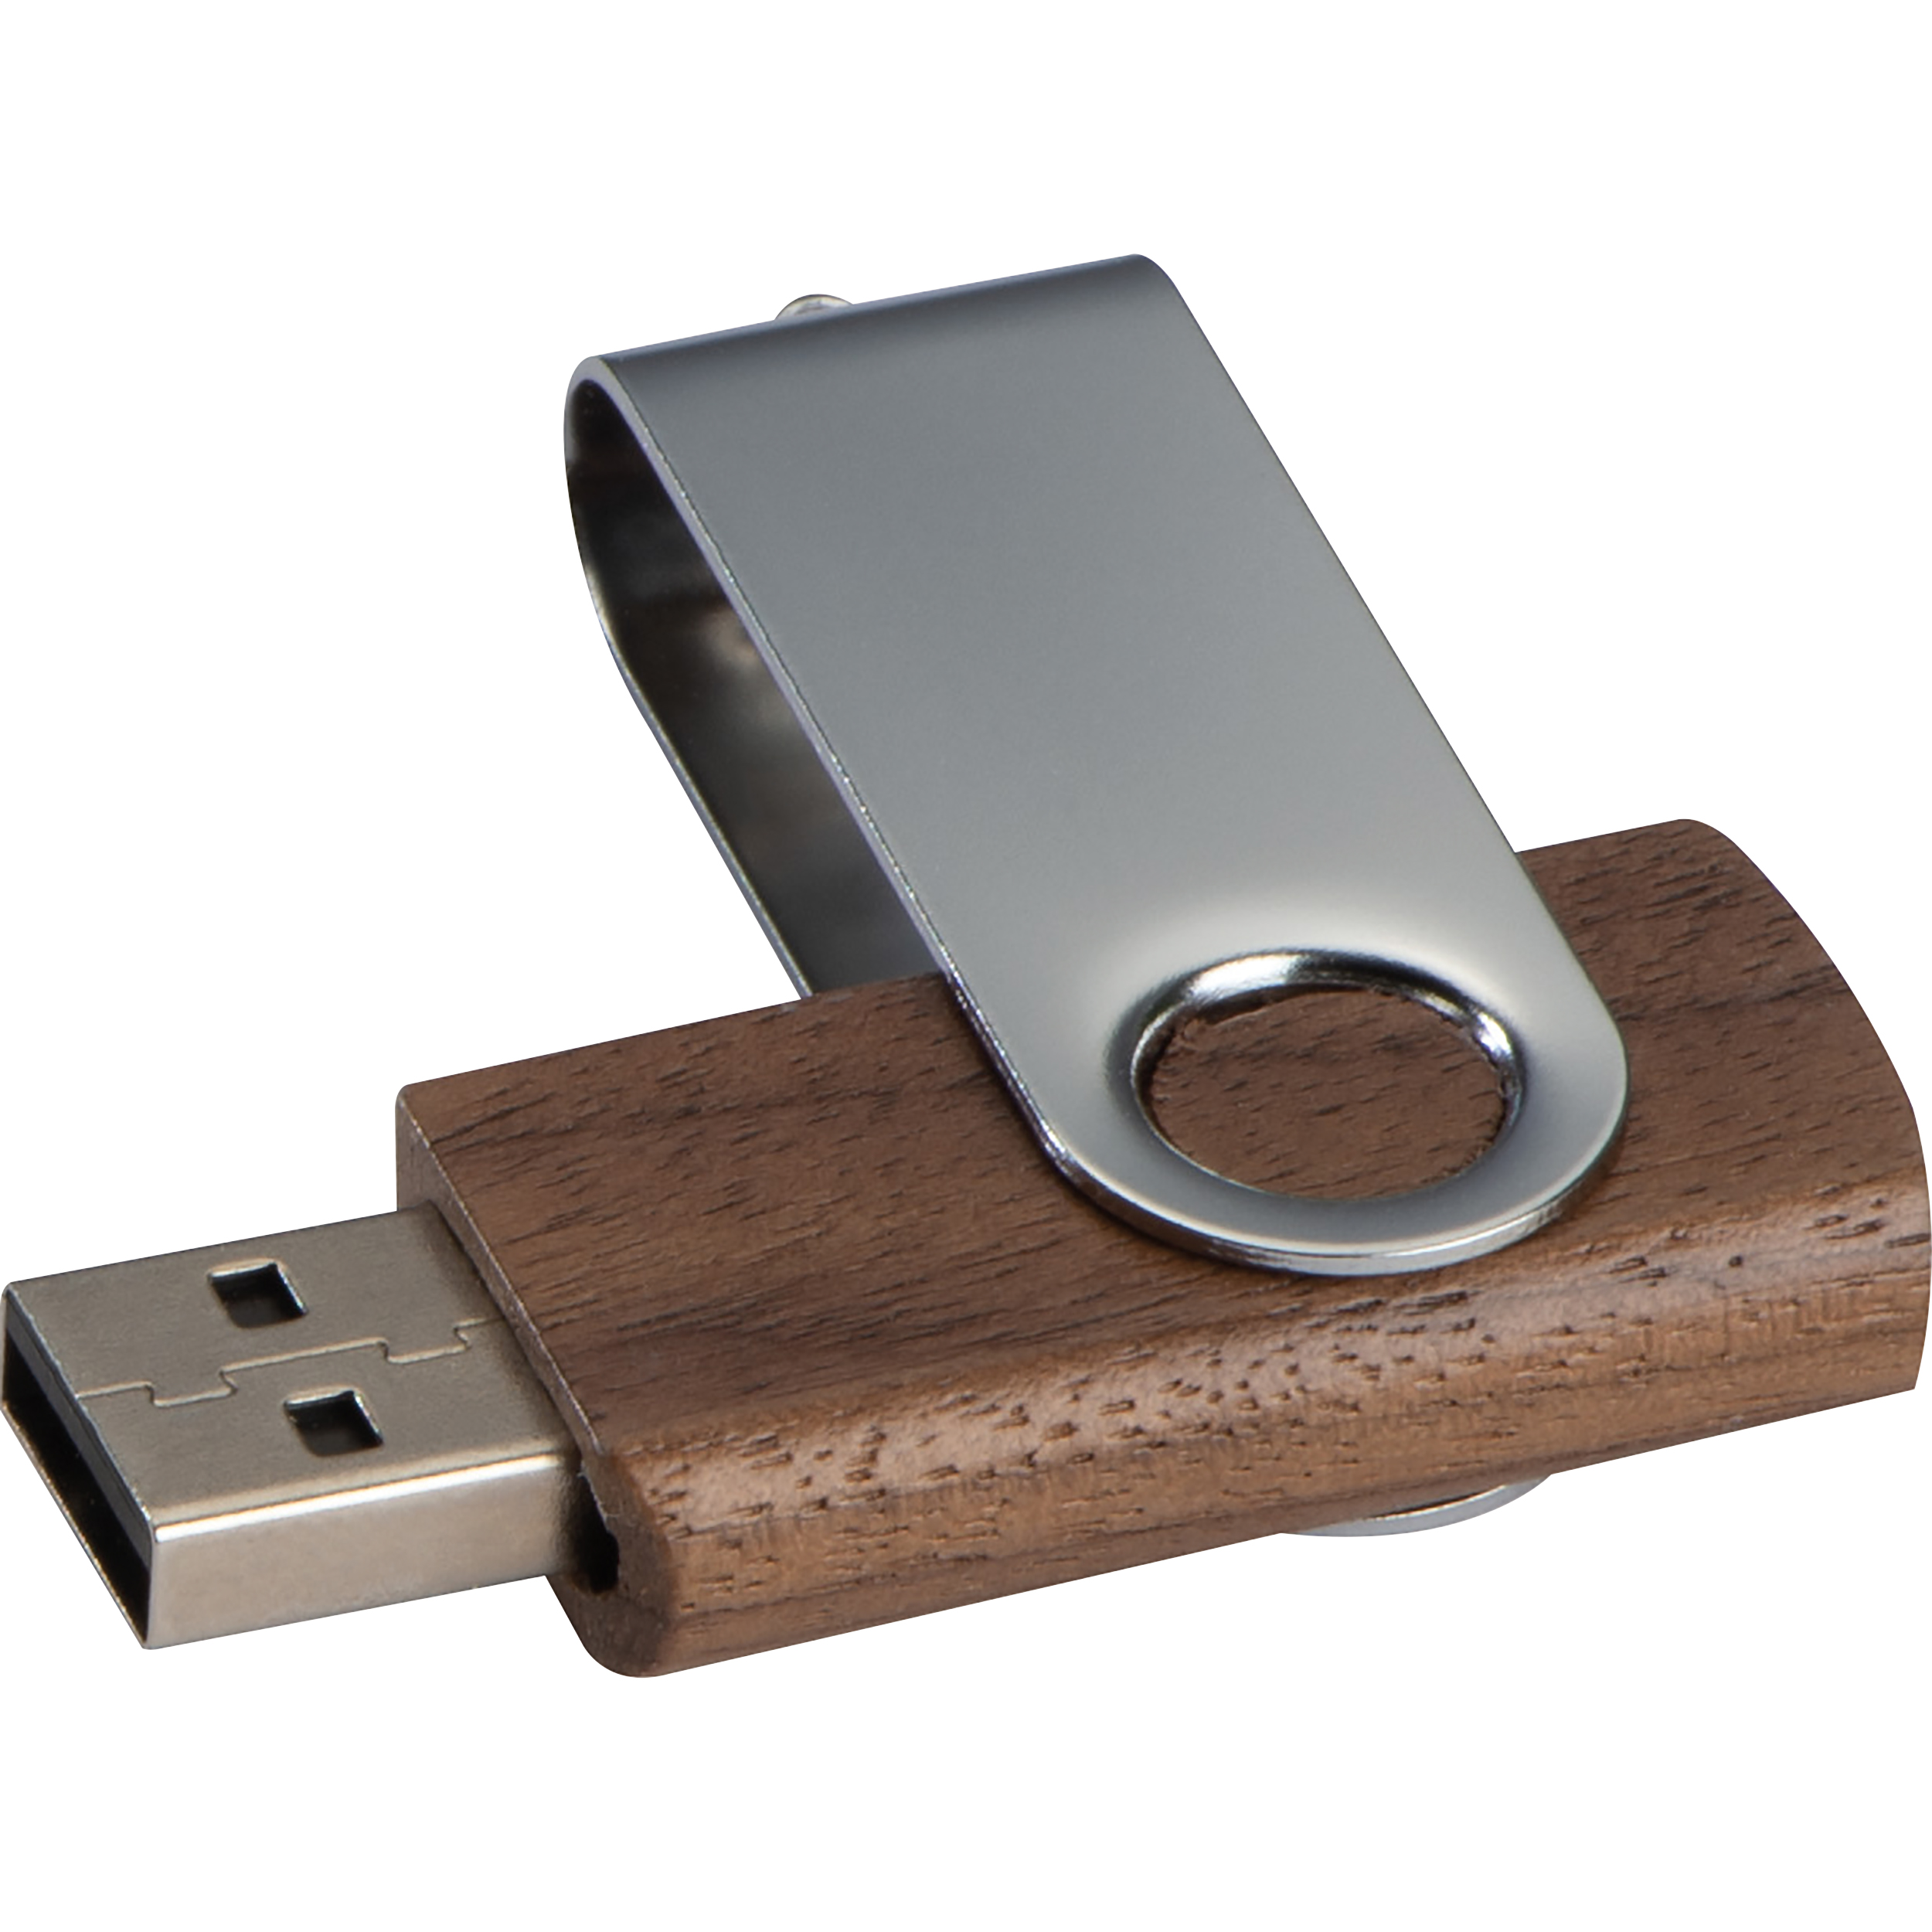 USB de Nogal - Smeeth - A Pobra do Caramiñal